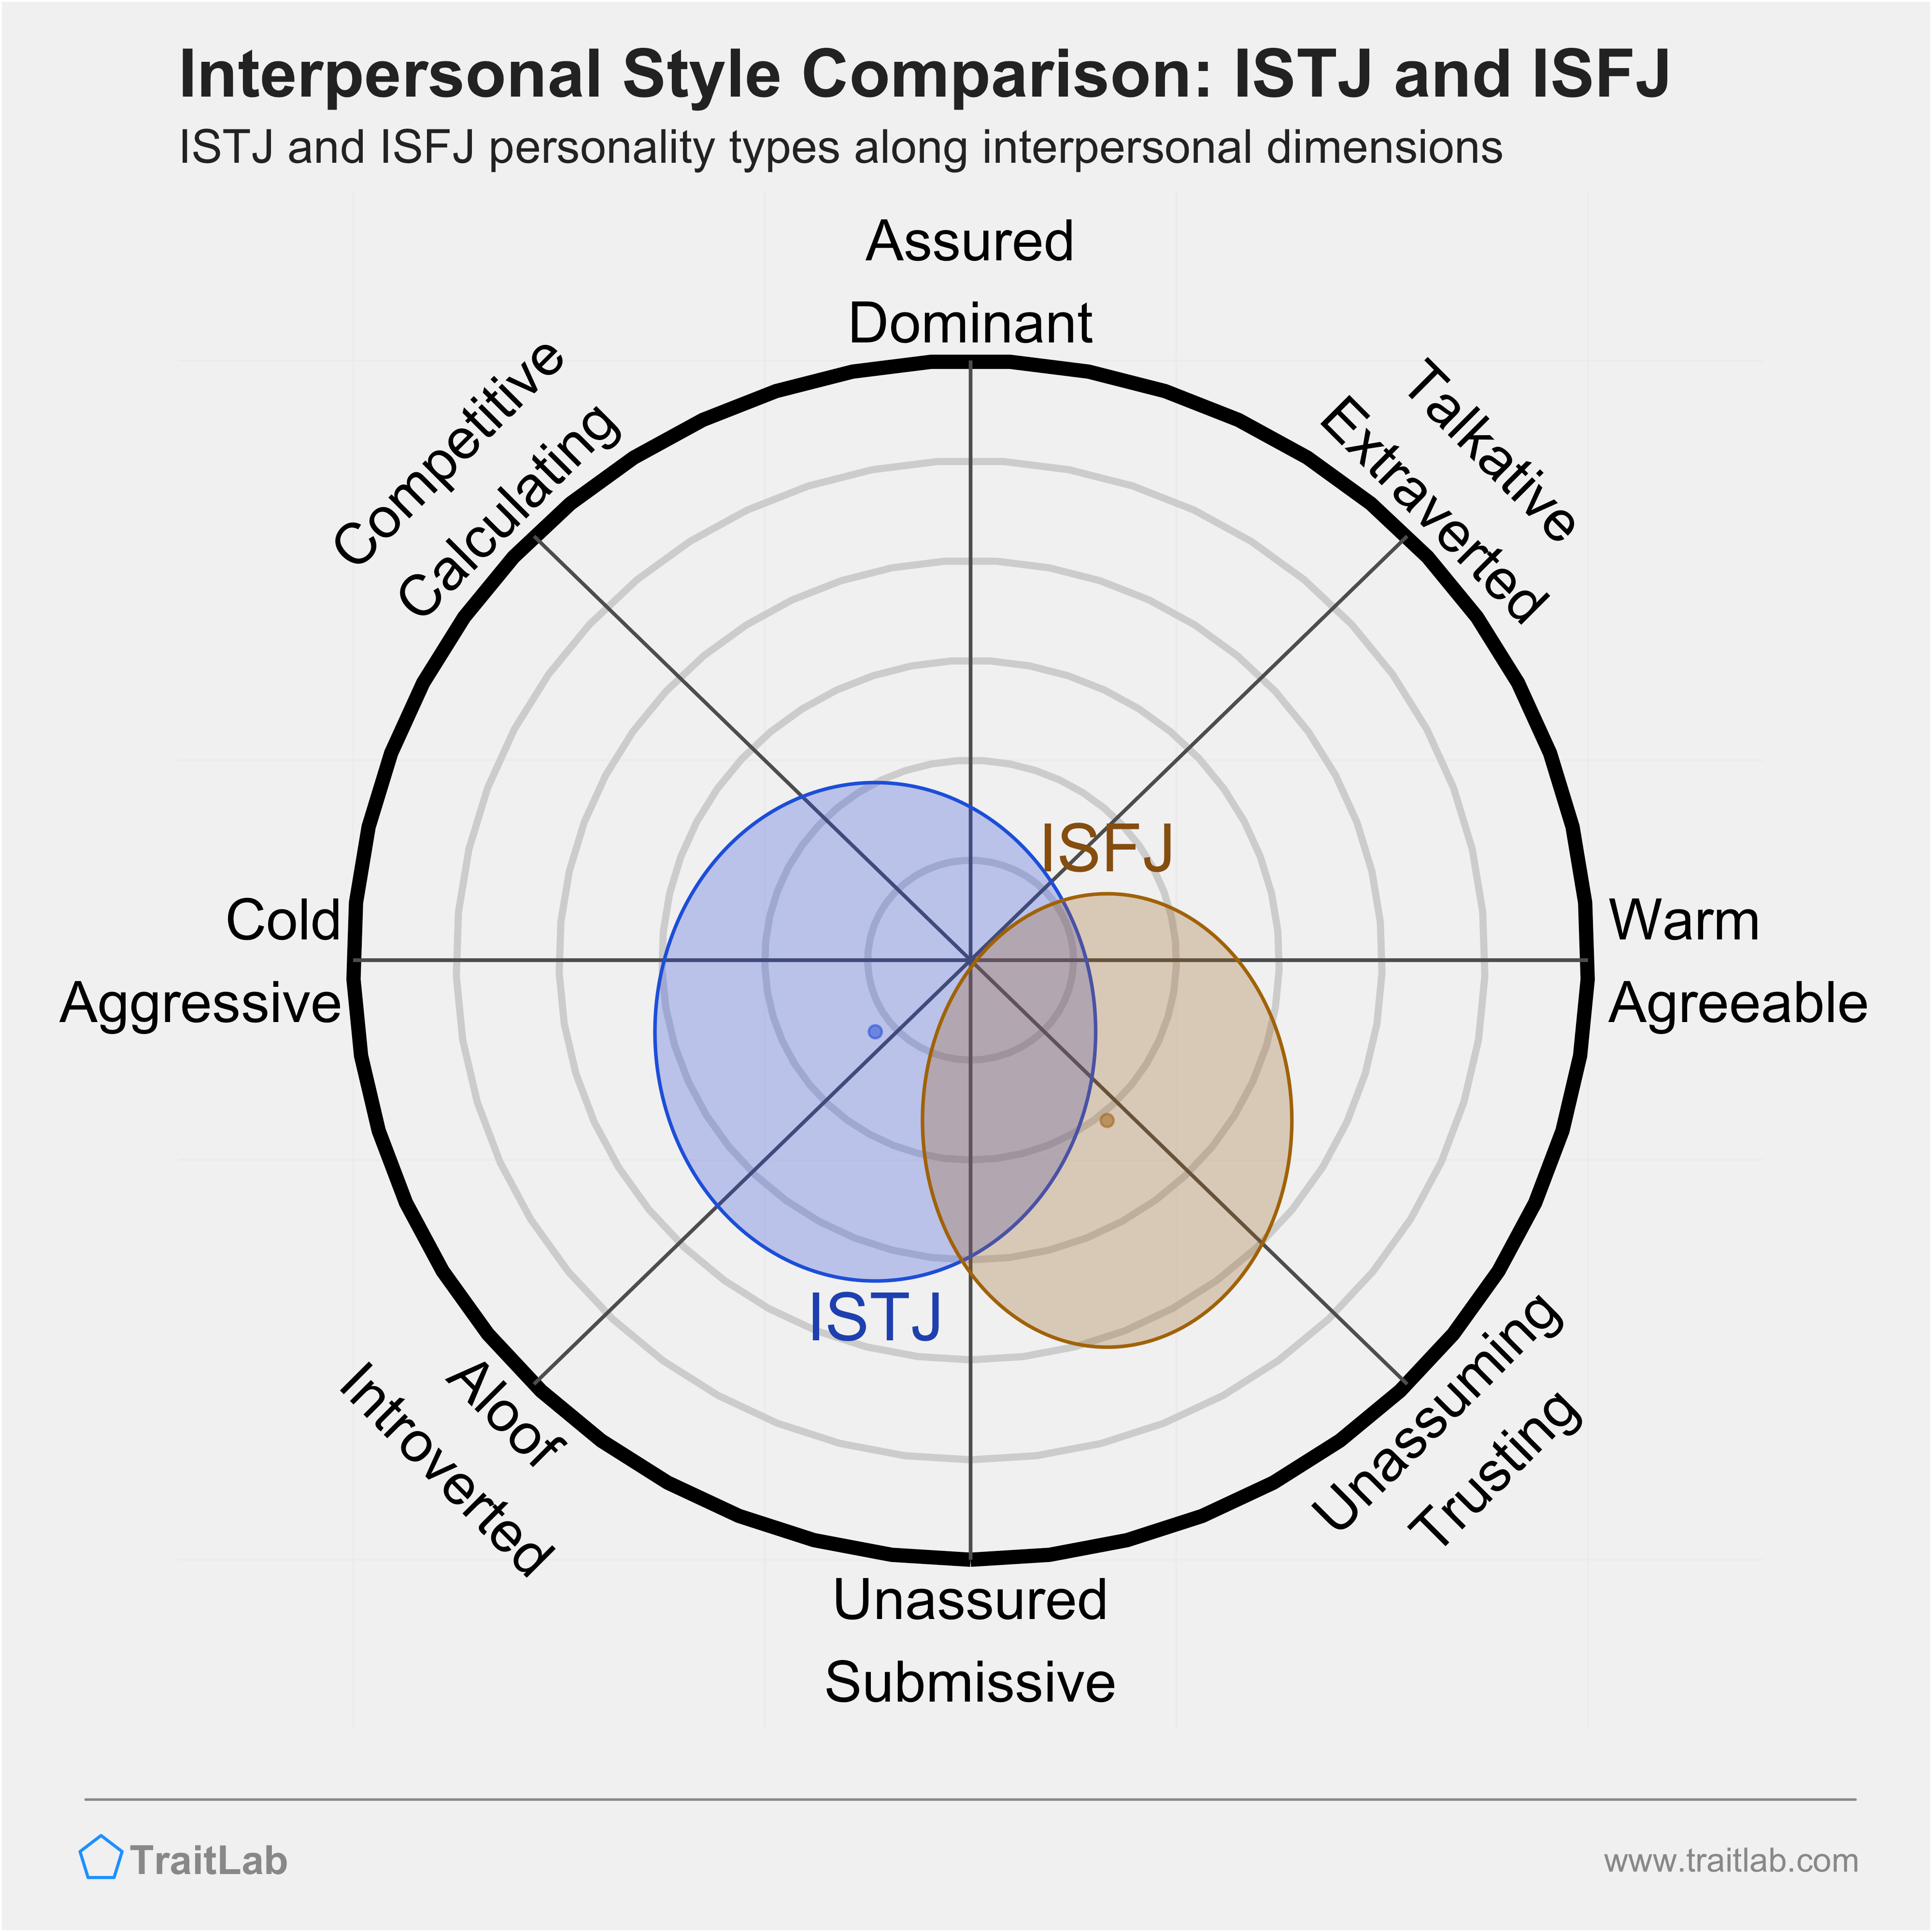 ISTJ and ISFJ comparison across interpersonal dimensions